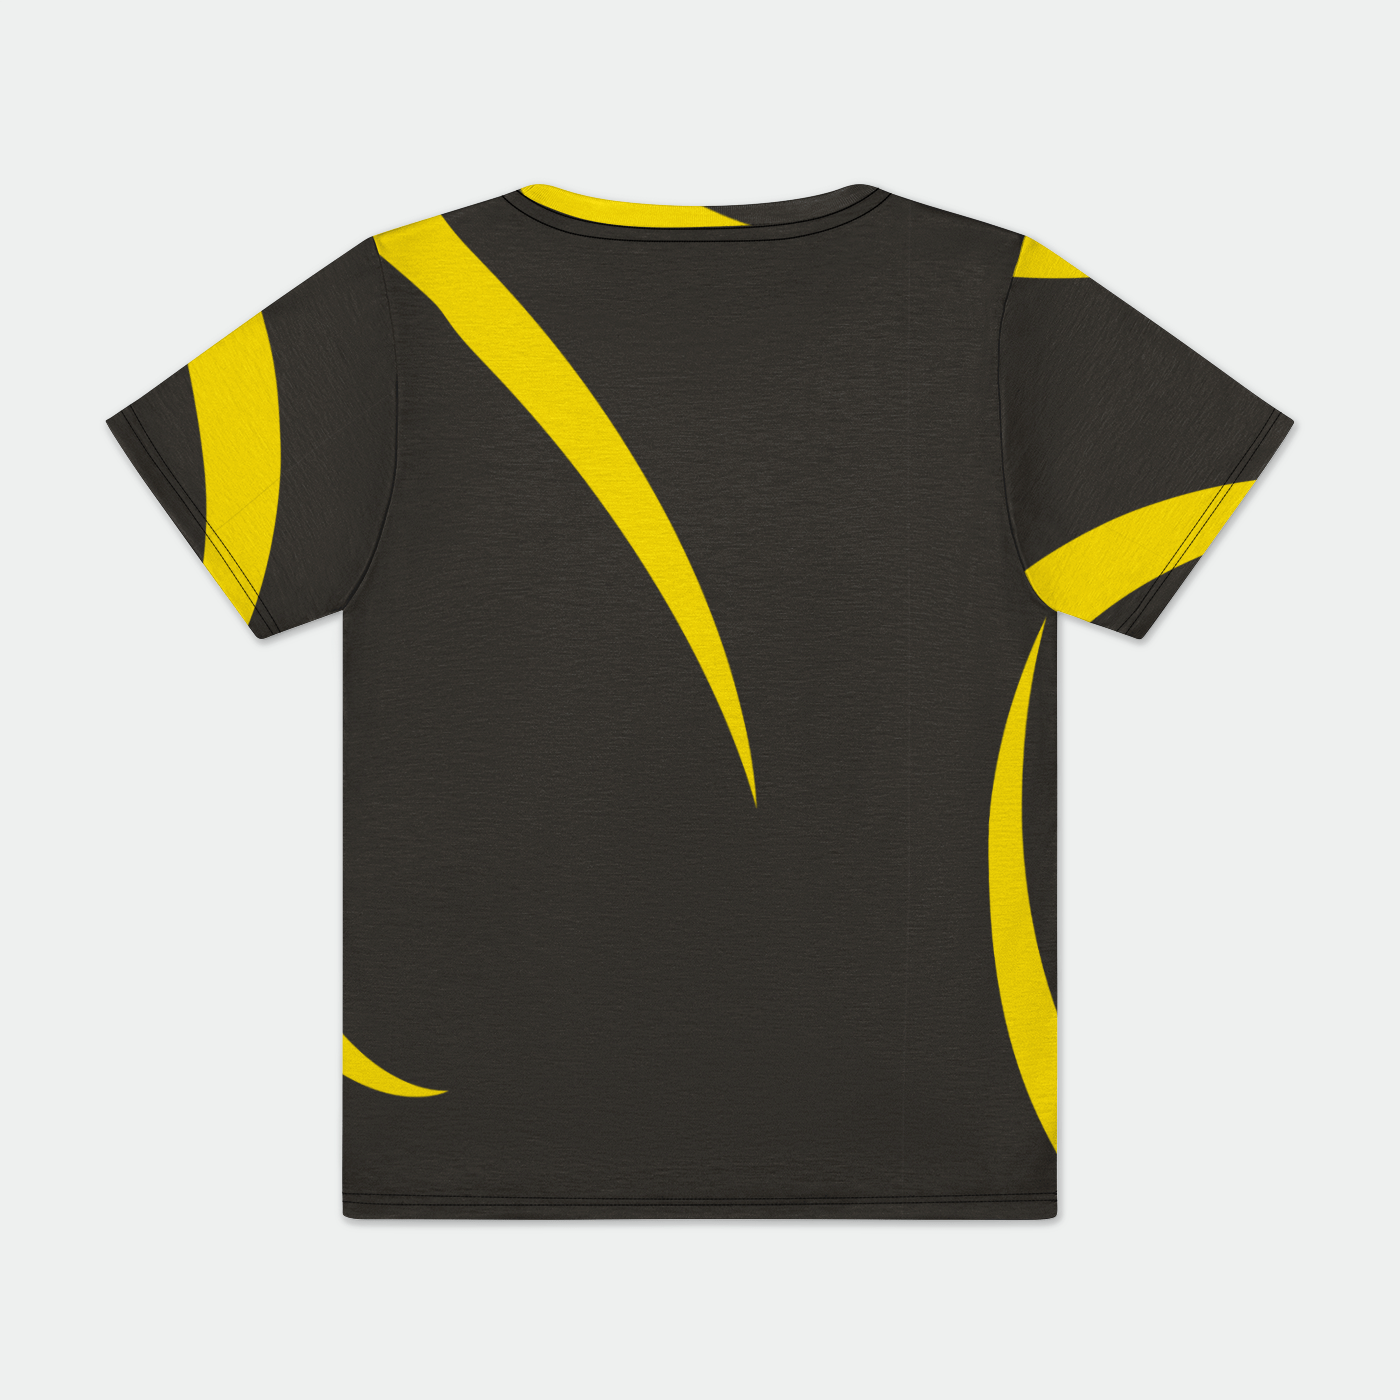 Honey Badgers LC Athletic T-Shirt Signature Lacrosse